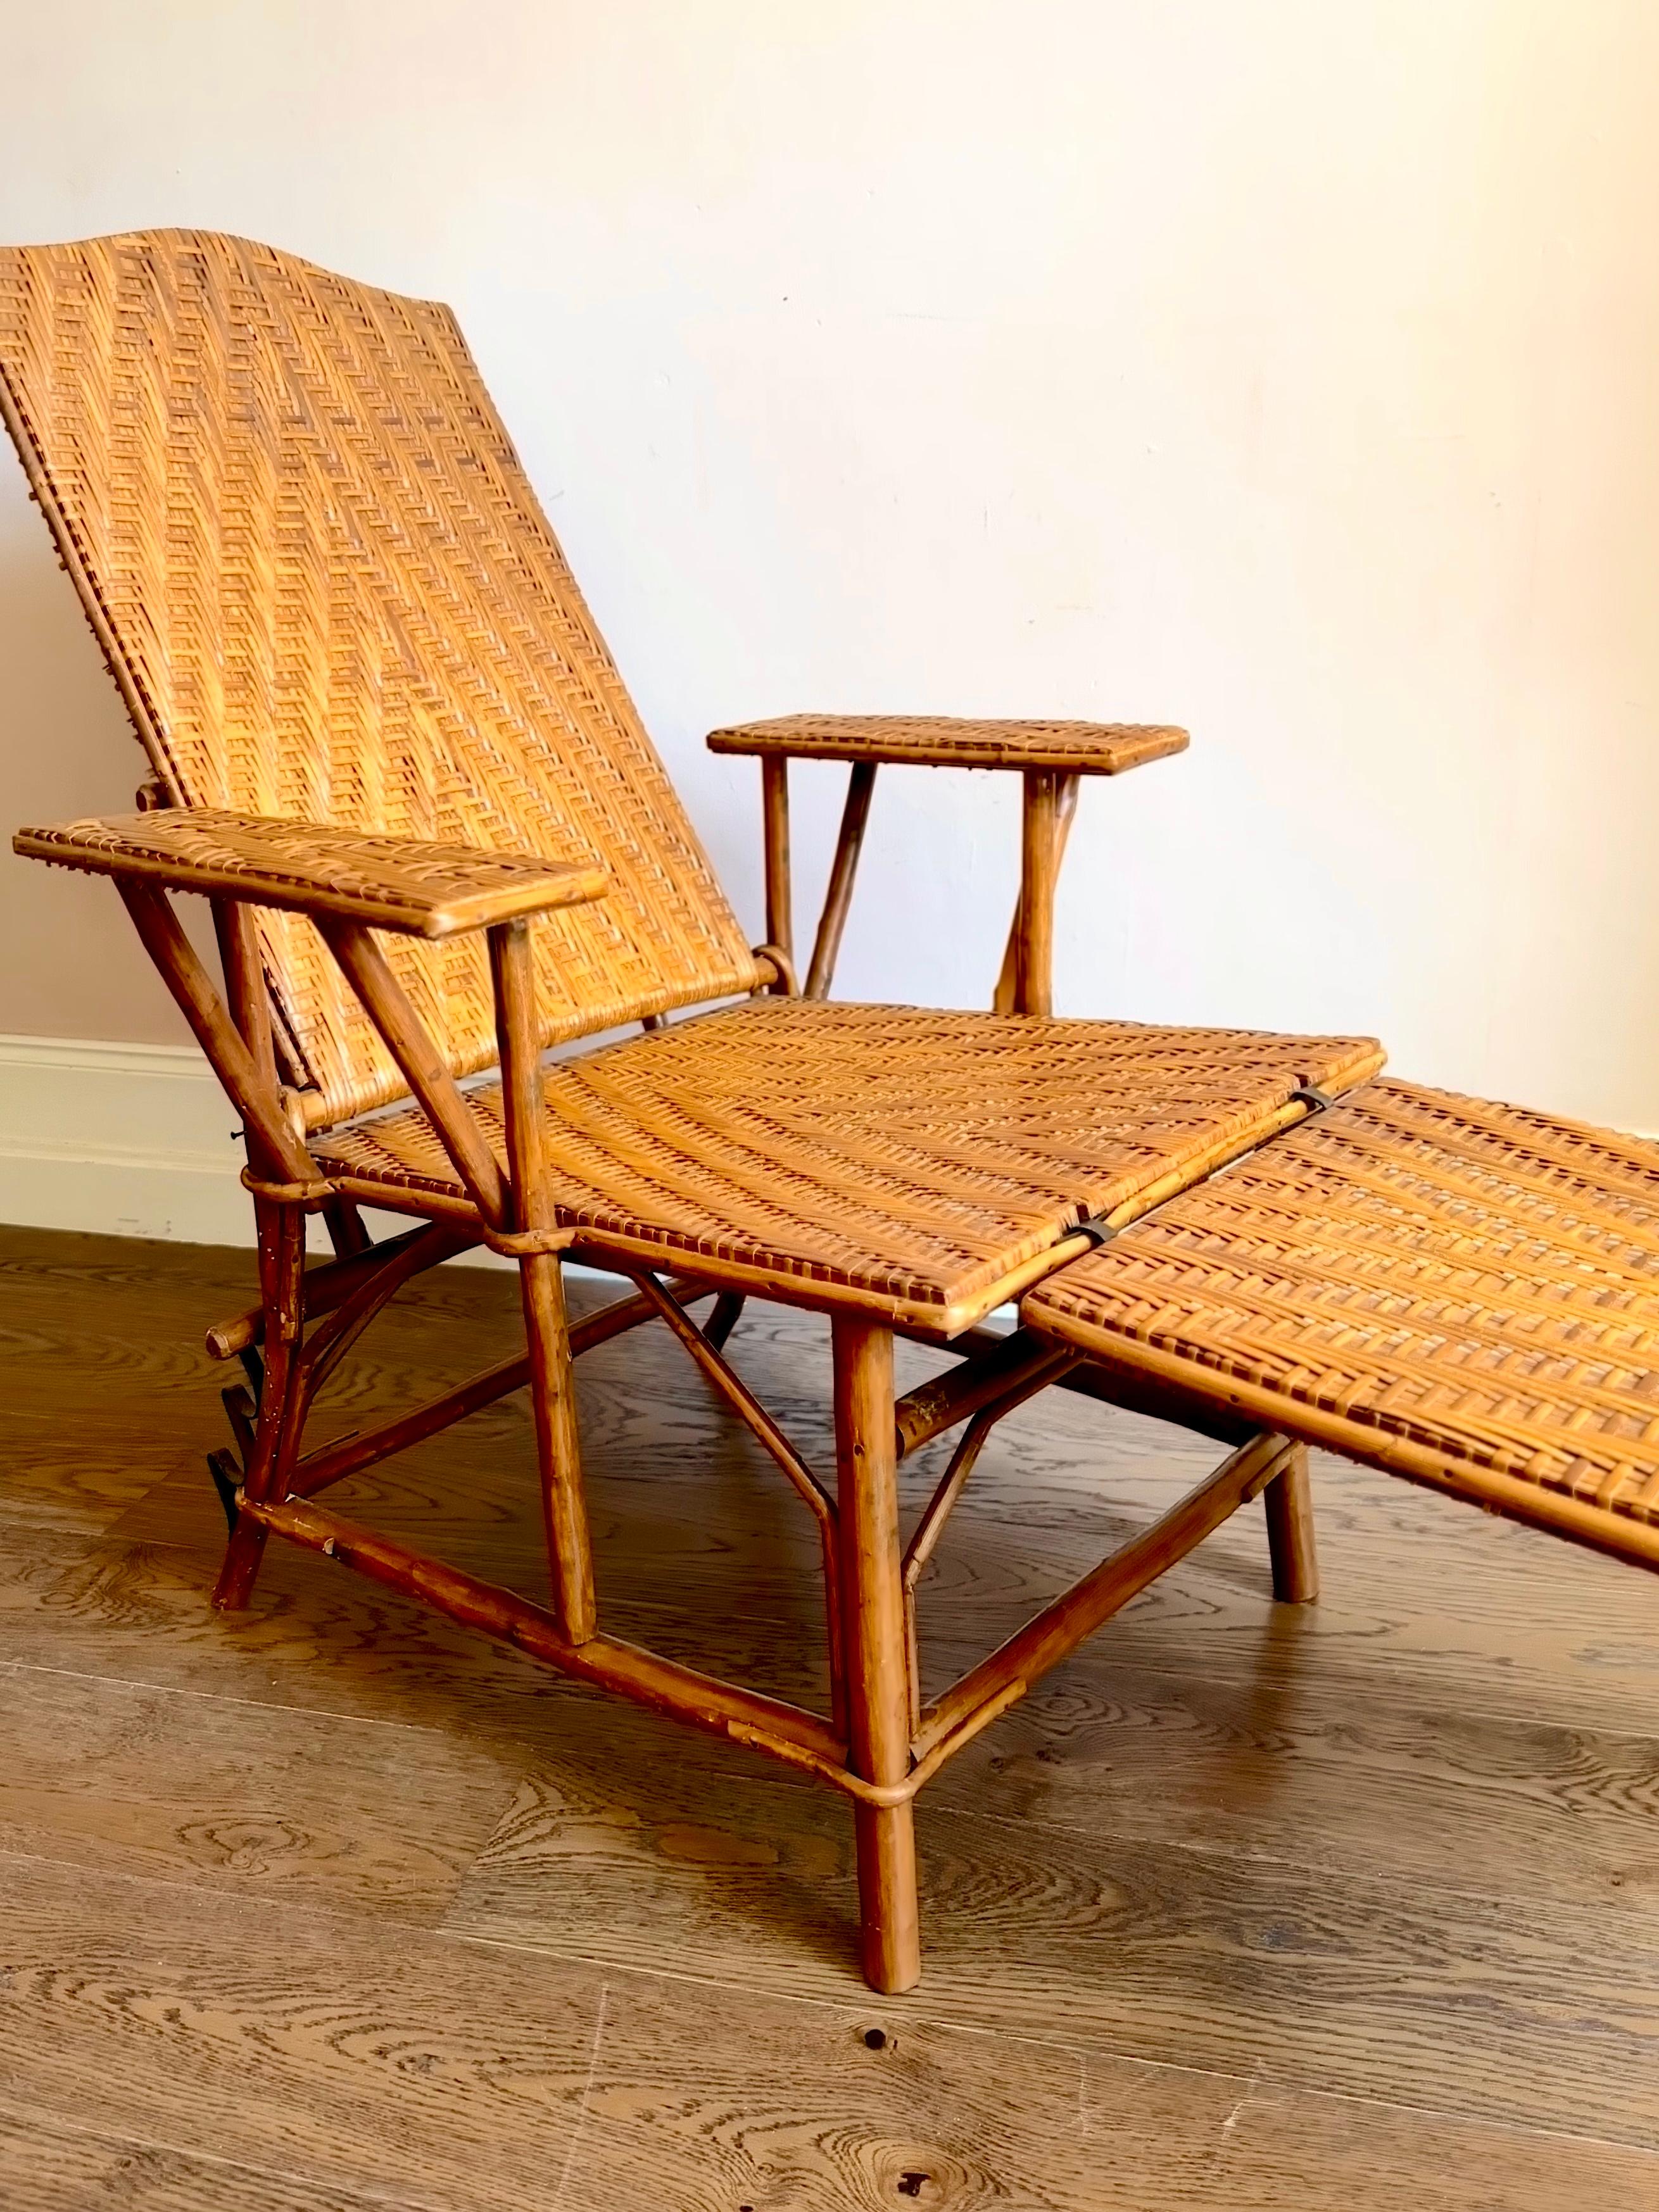 Art Deco 1930s French Rattan & Wood Chaise Longue Sun Lounger